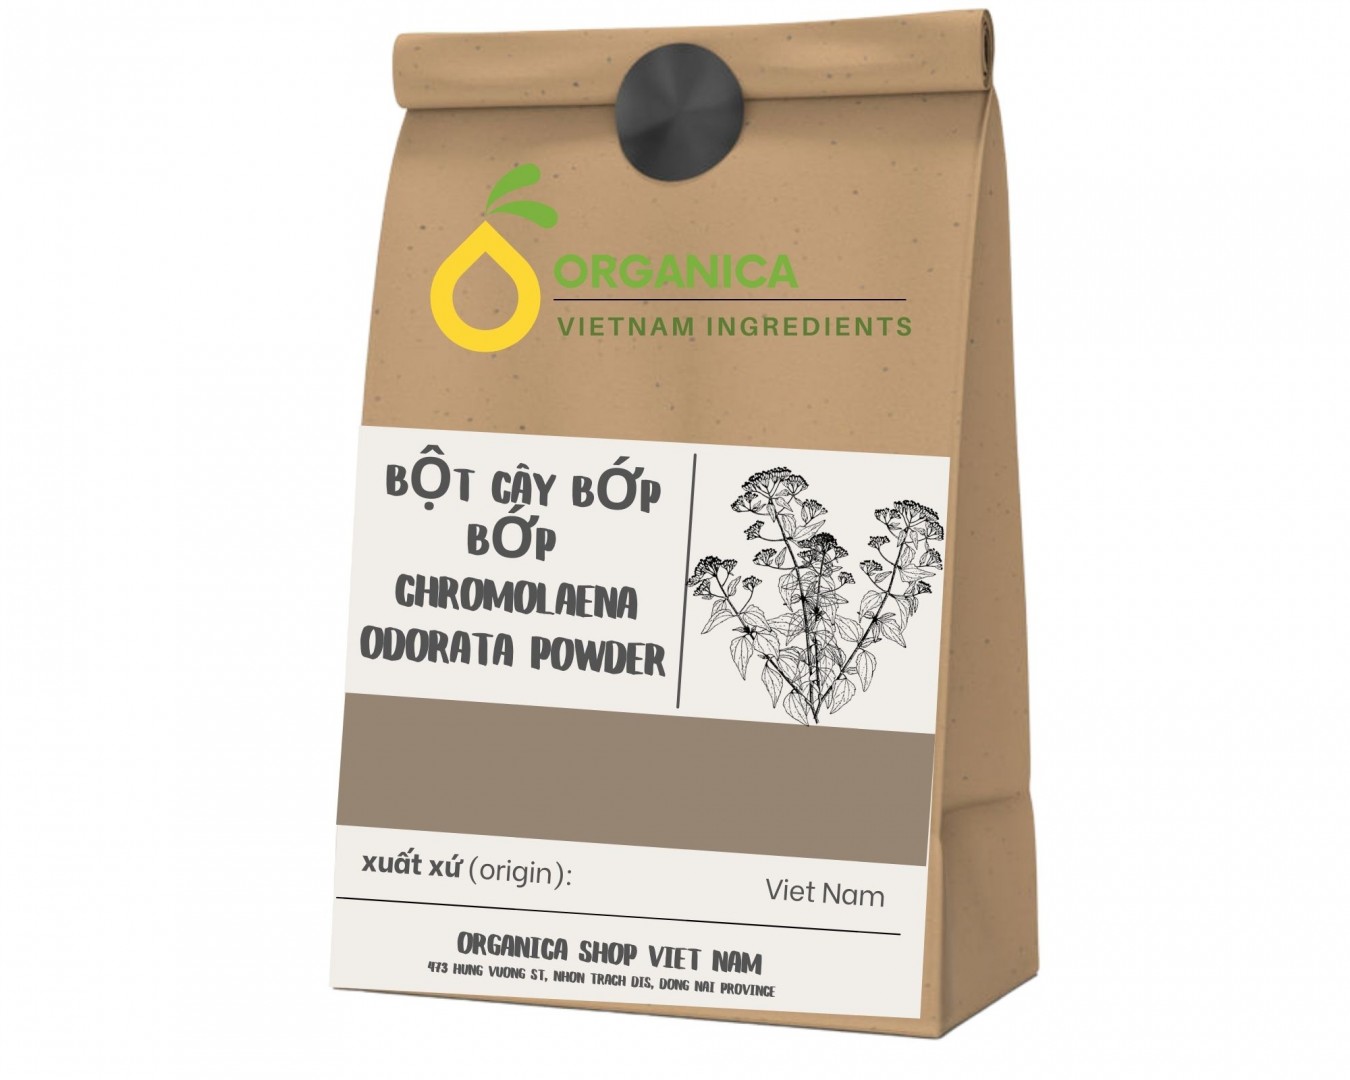 Bột cây bớp bớp (Chromoleana Odorata Powder)